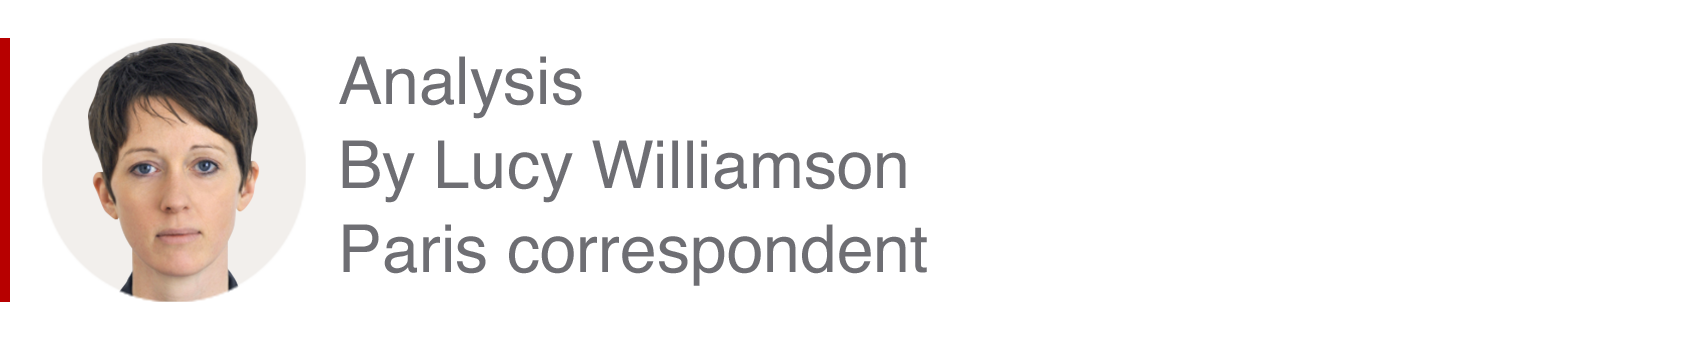 Analysis box by Lucy Williamson, Paris correspondent